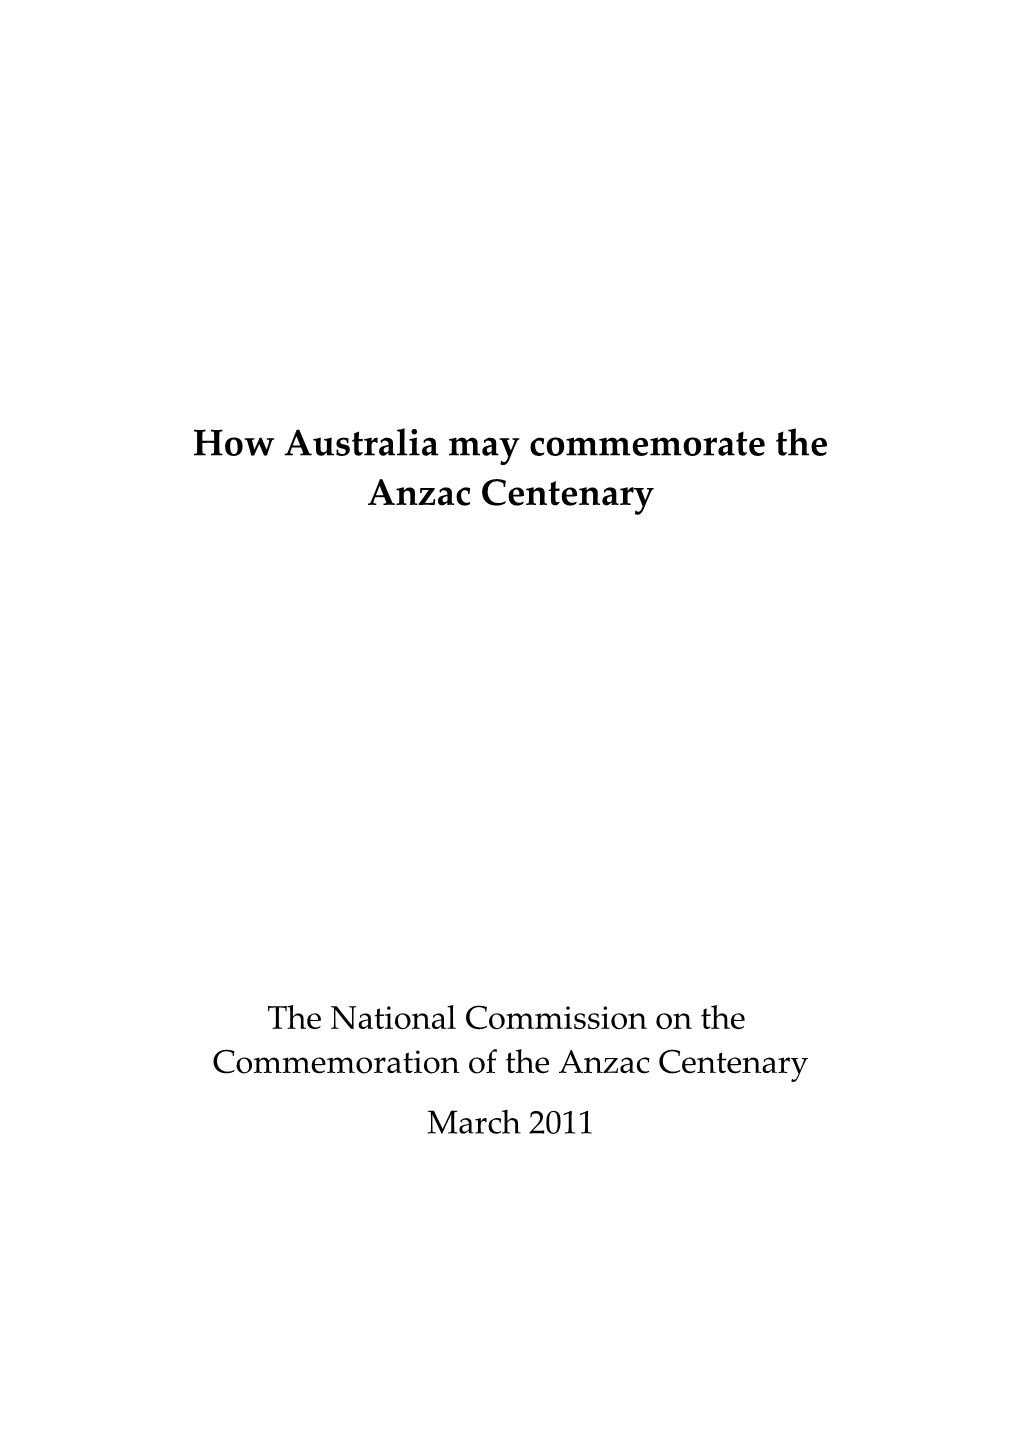 How Australia May Commemorate the Anzac Centenary